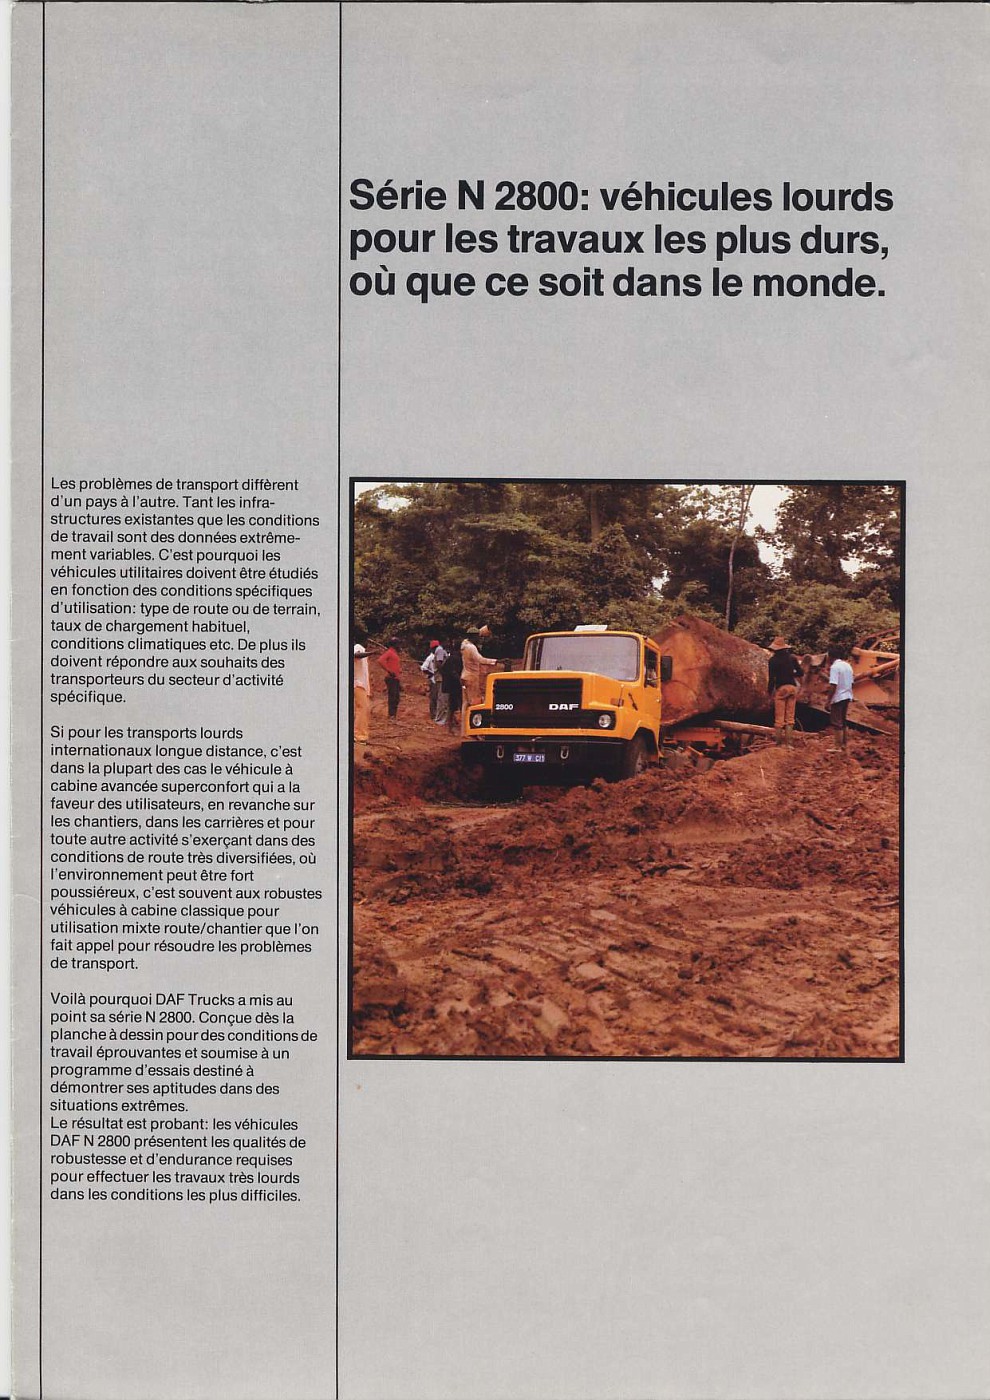 N2800-02 | N French album | Model Truck Club | Fotki.com, photo and video sharing made easy.